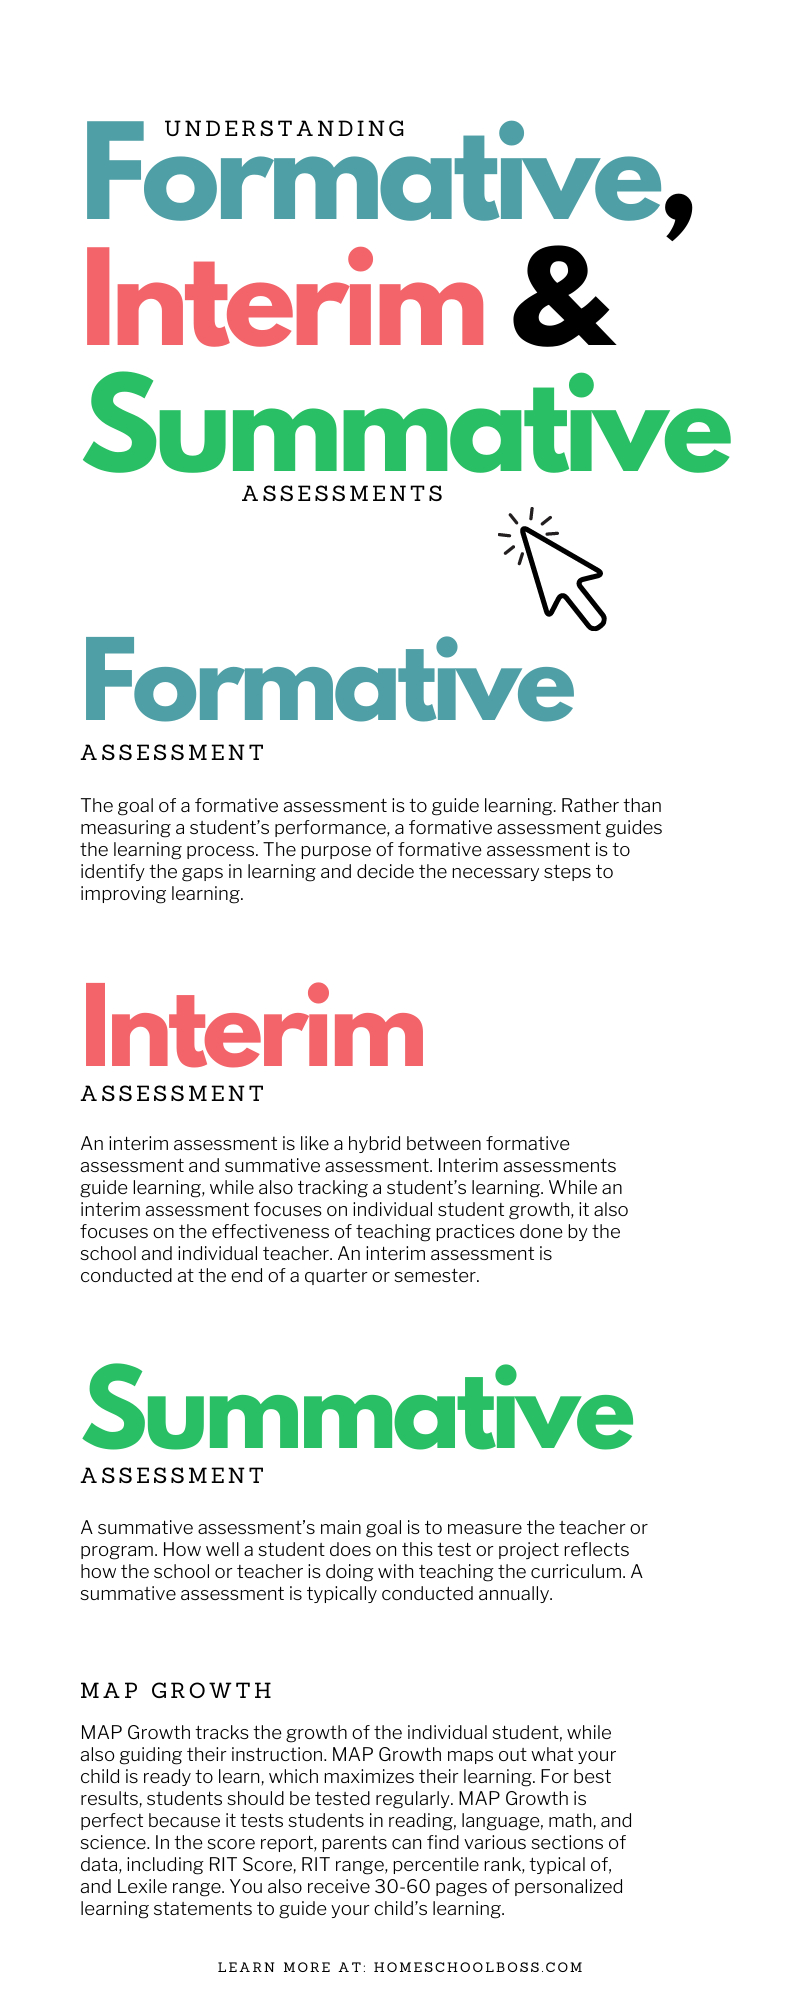 Understanding Formative, Interim, and Summative Assessments 
